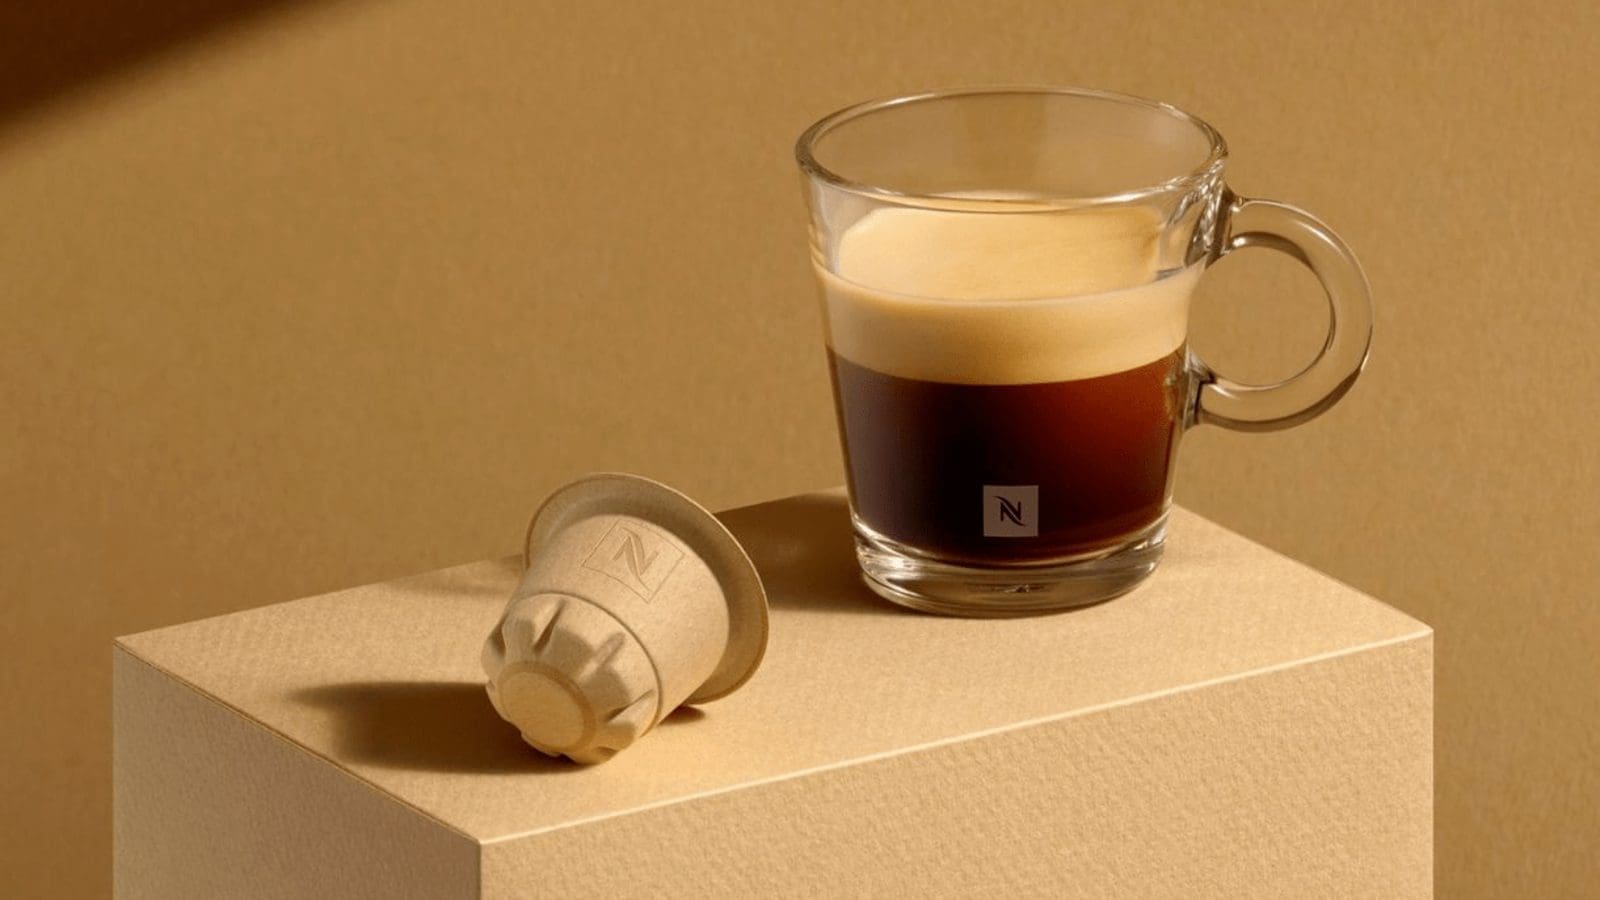 Nestlé’s Nespresso introduces paper-based compostable capsules as alternative to aluminum ones